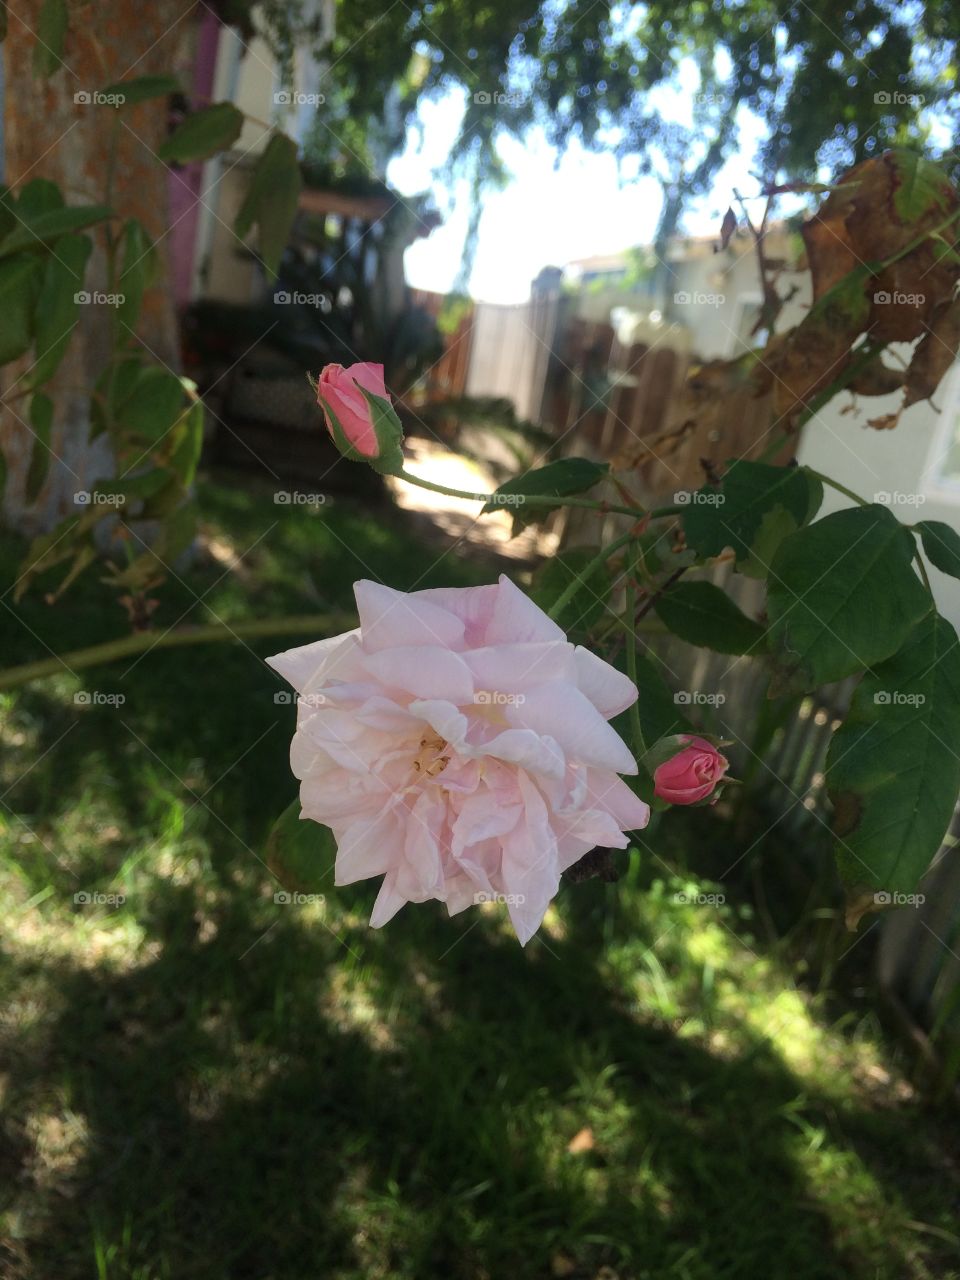 Roses in my garden. Roses.